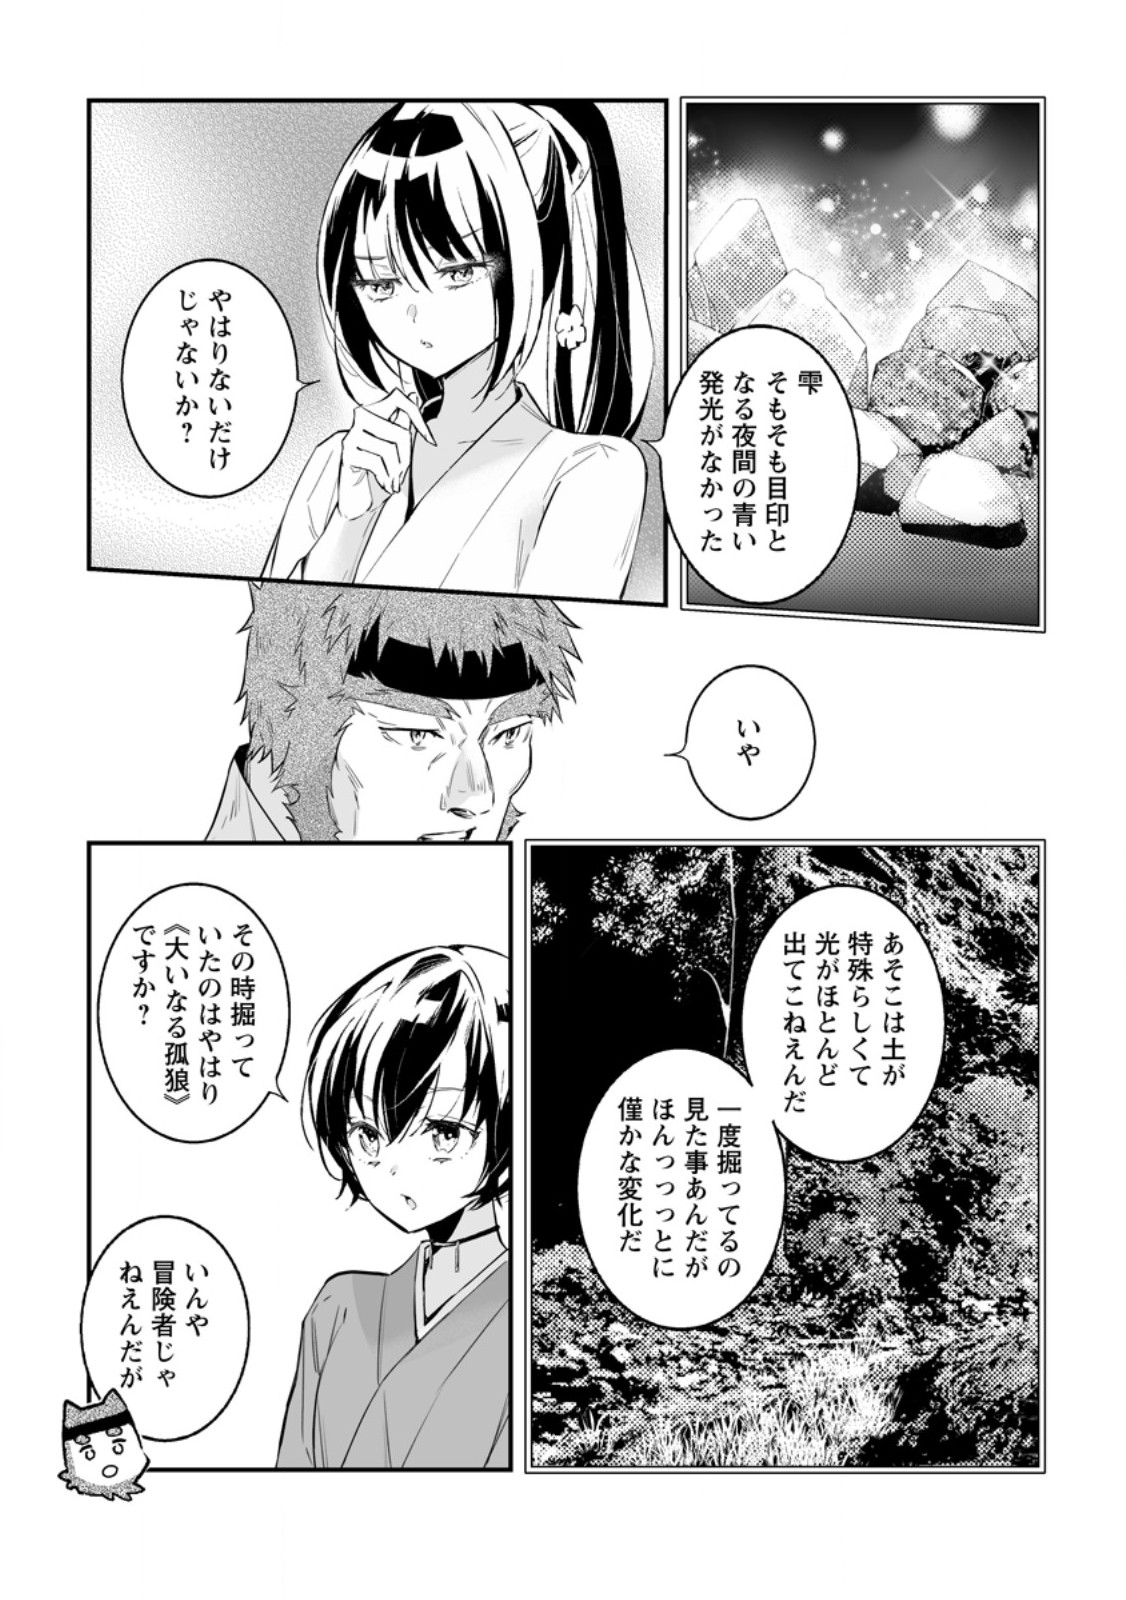 Hakui no Eiyuu - Chapter 31.3 - Page 2